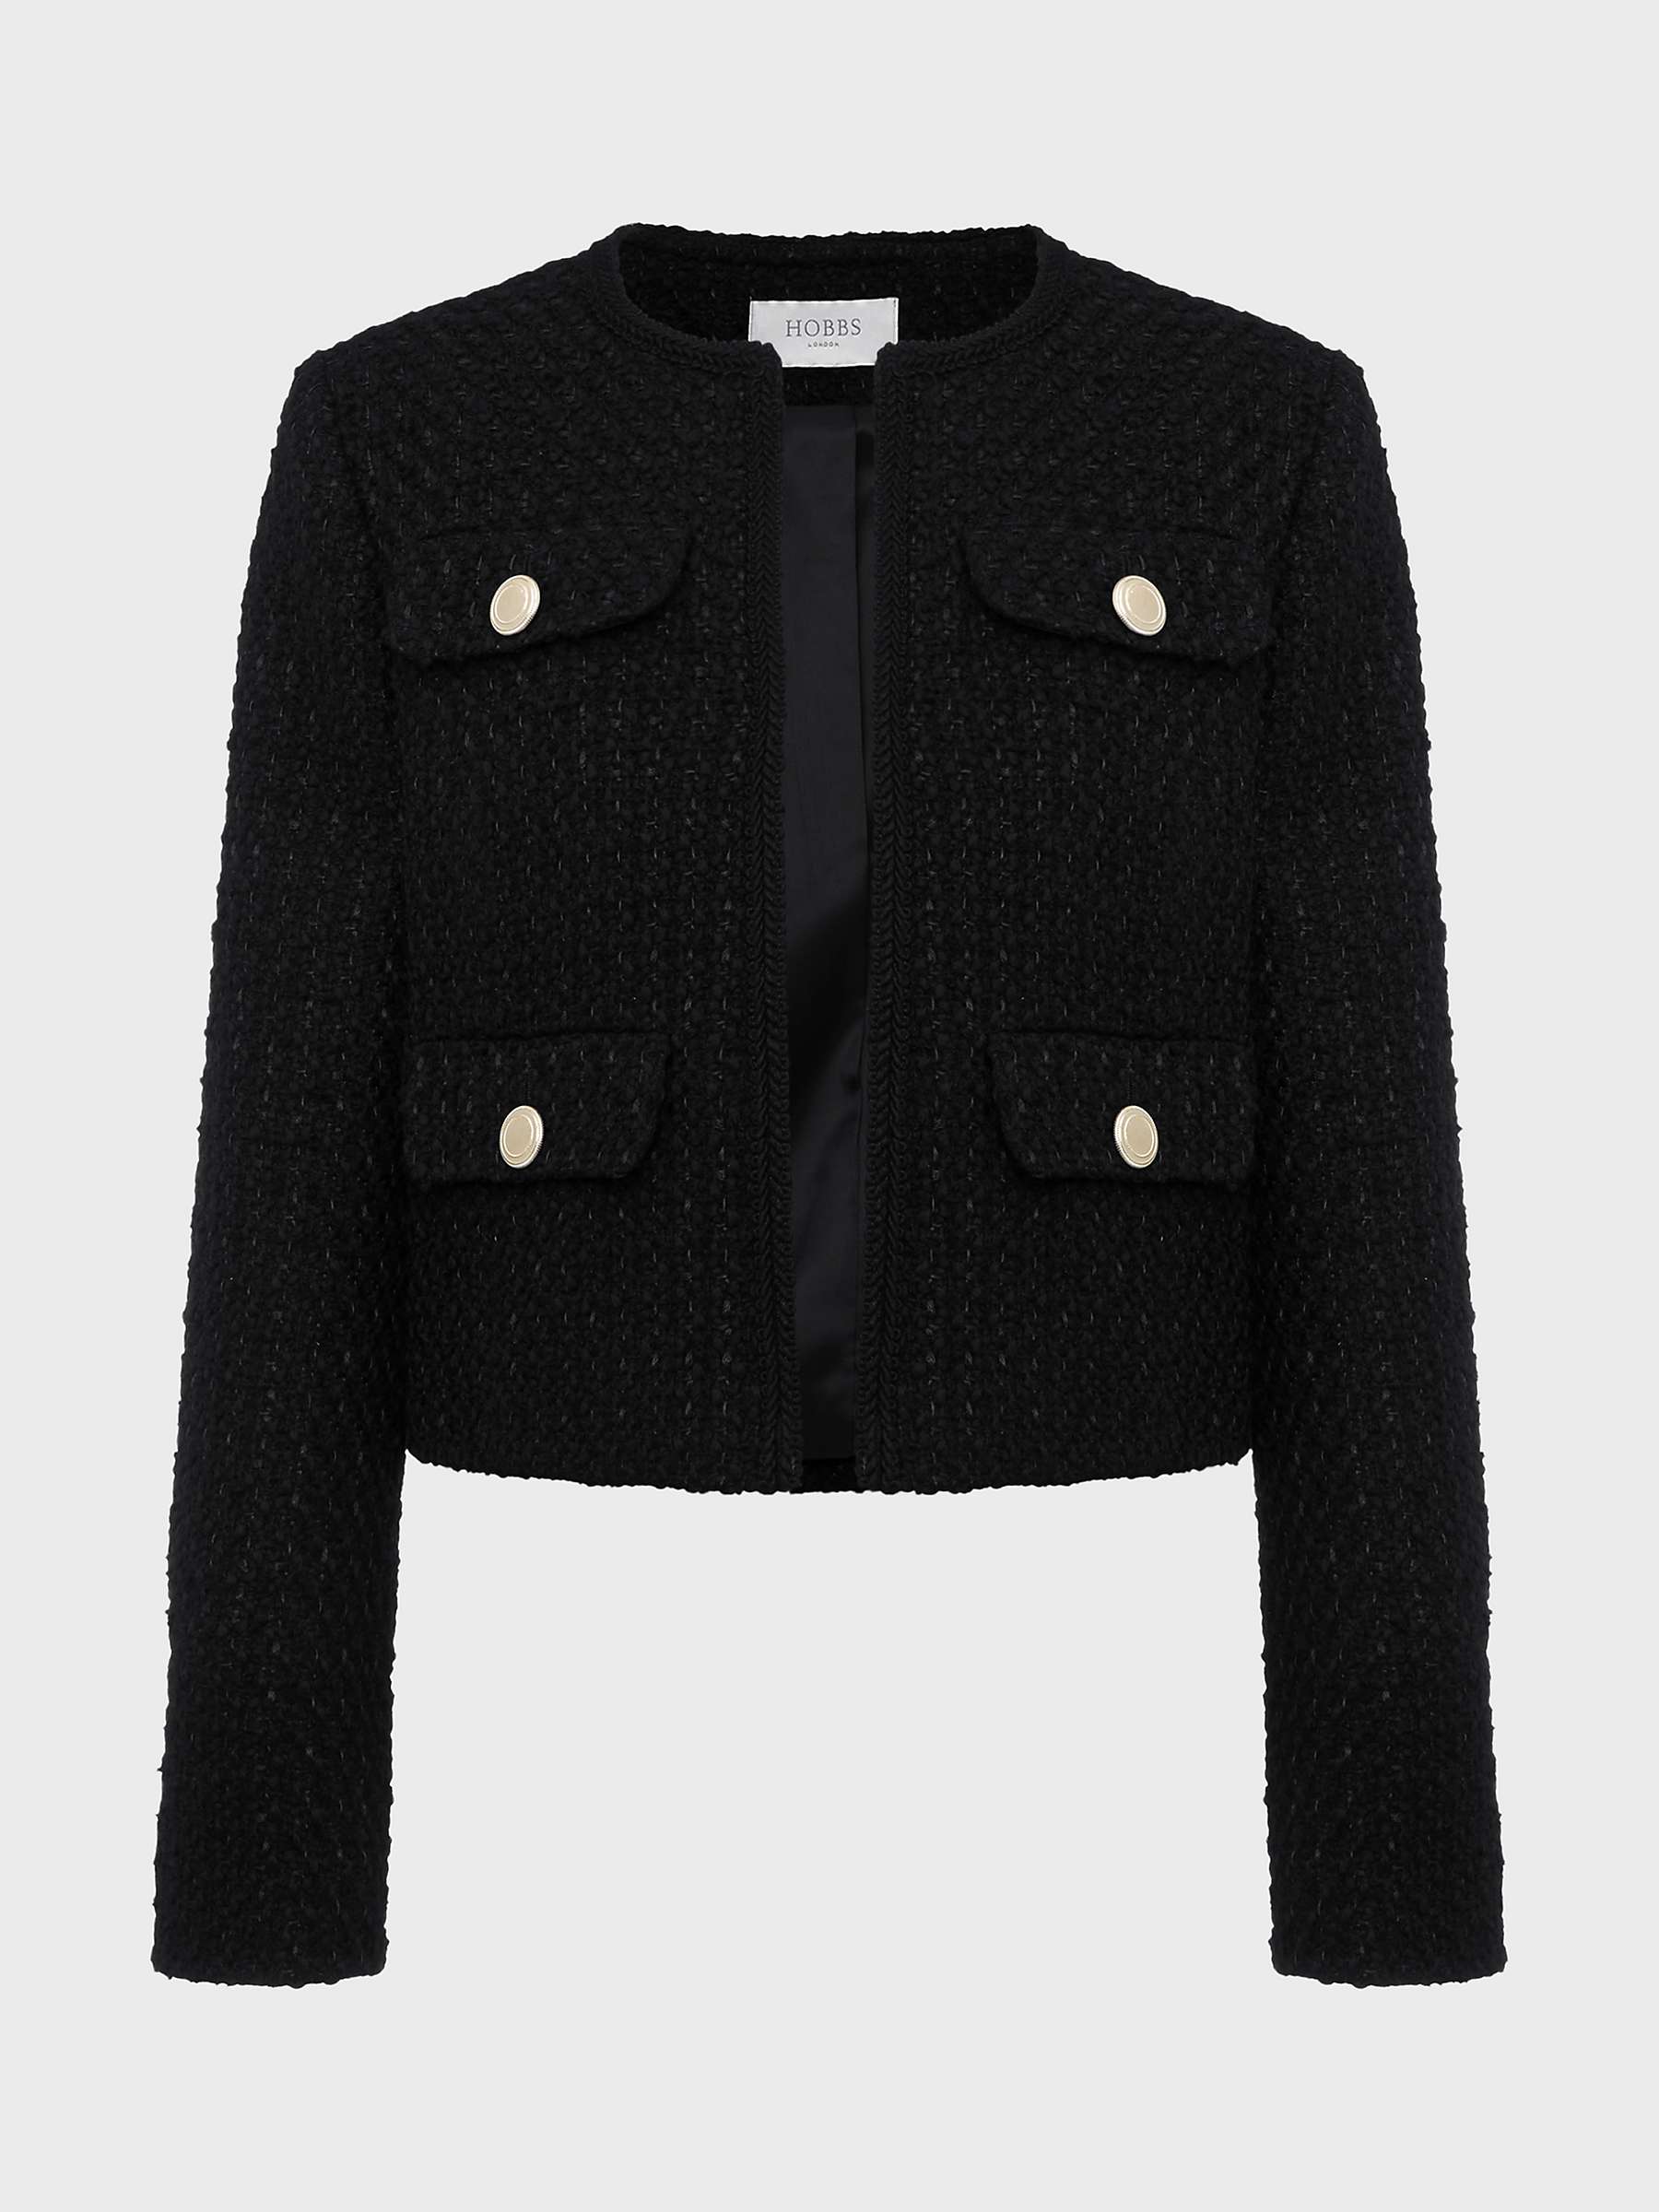 Buy Hobbs Emmy Knitted Jacket, Black Online at johnlewis.com